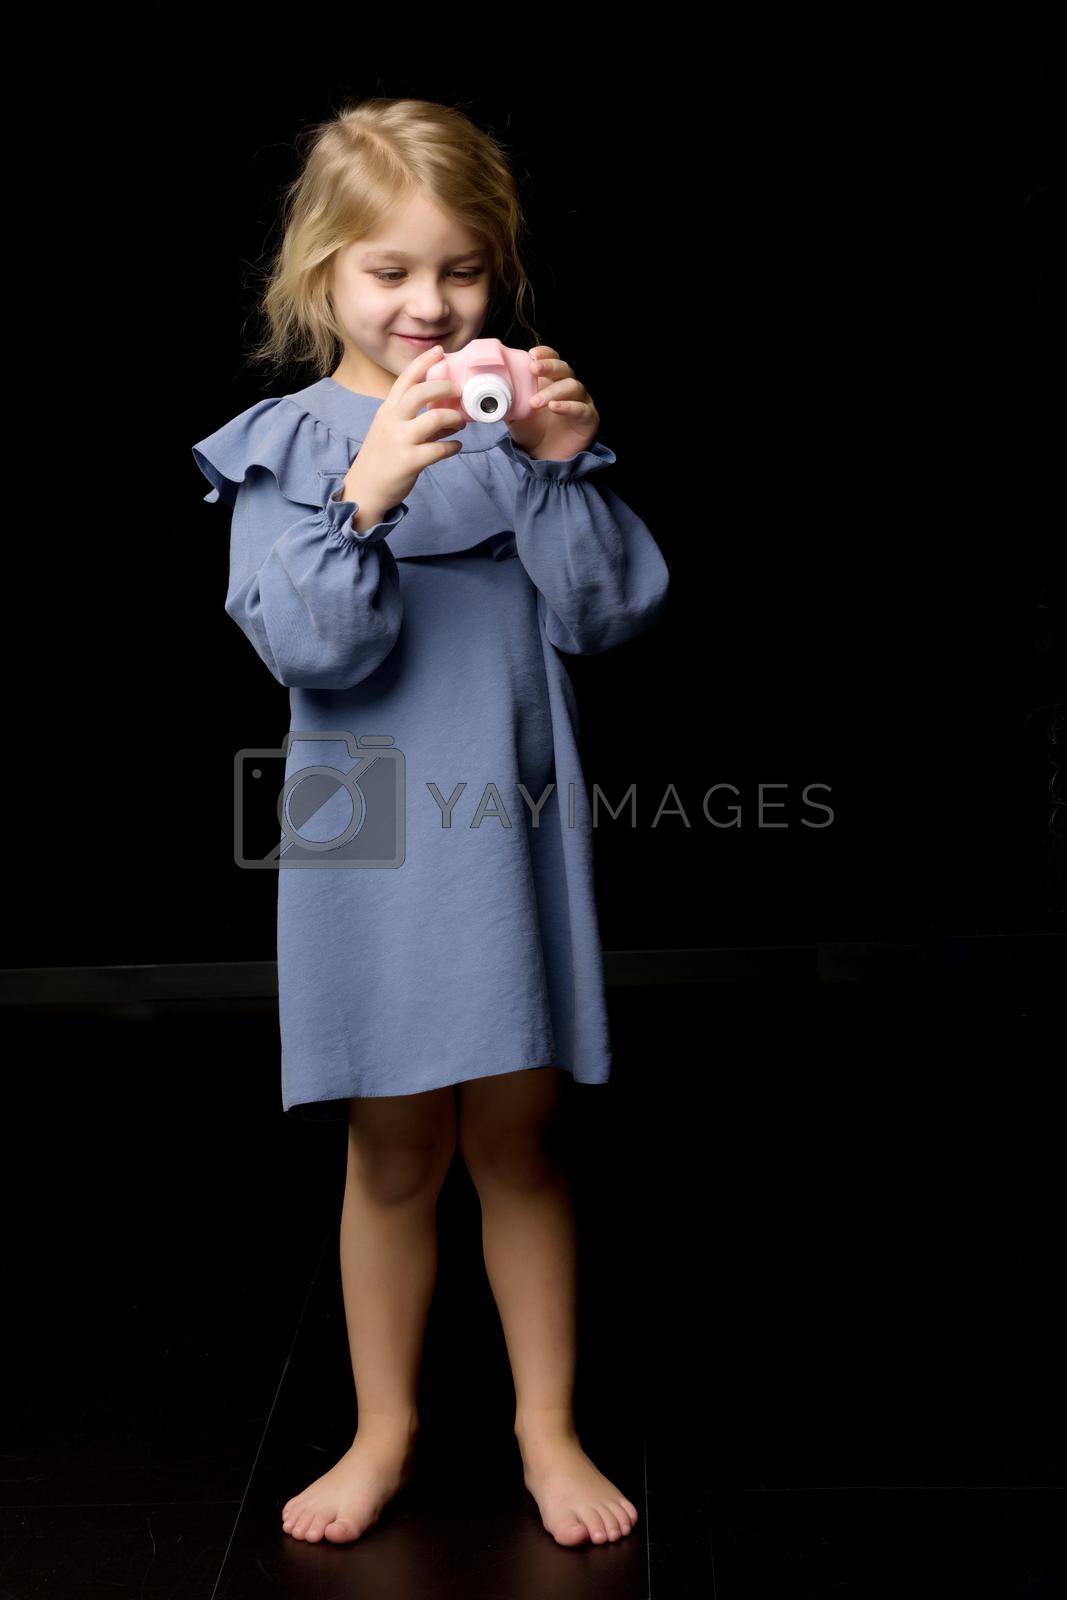 Royalty free image of Beautiful Barefoot Girl Taking Photo with Toy Camera by kolesnikov_studio